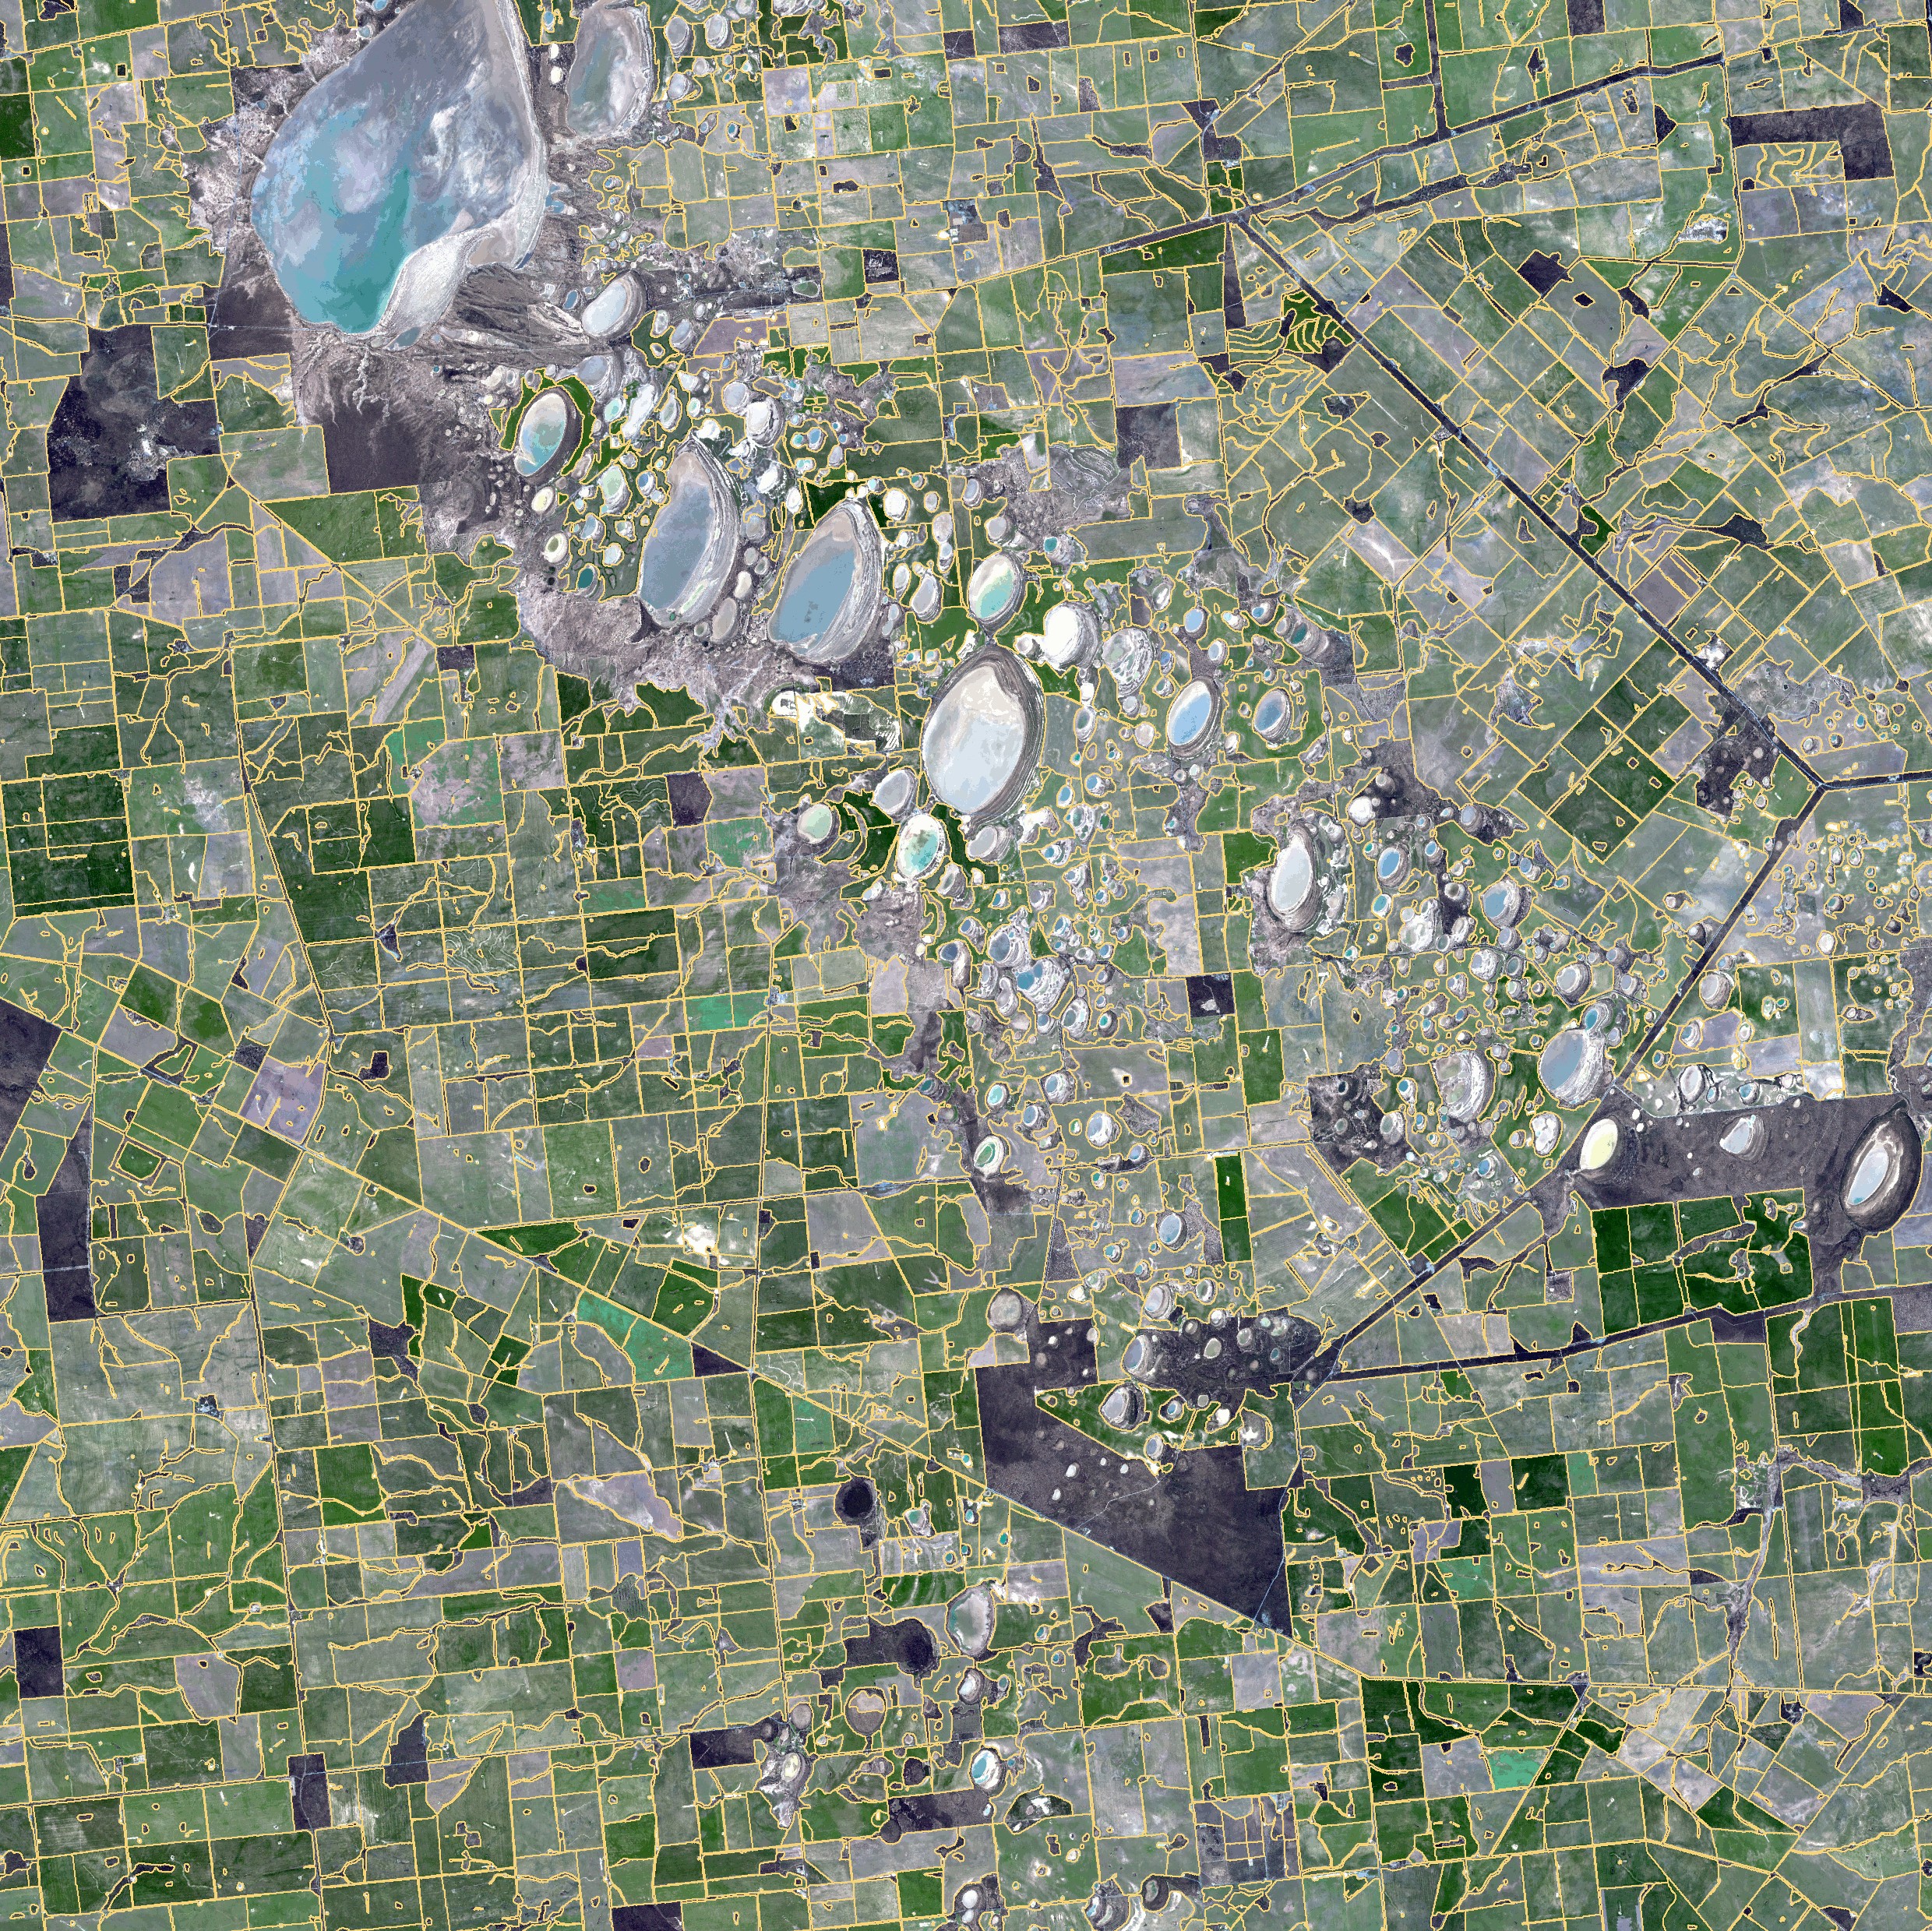 A satellite view of paddocks